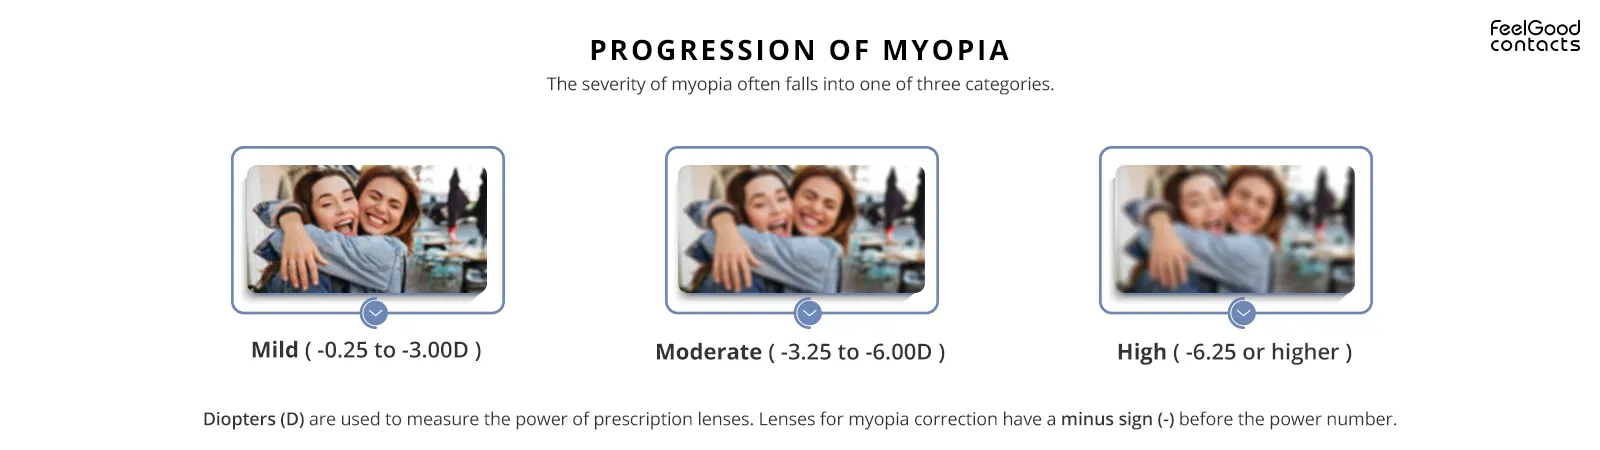 progression of myopia